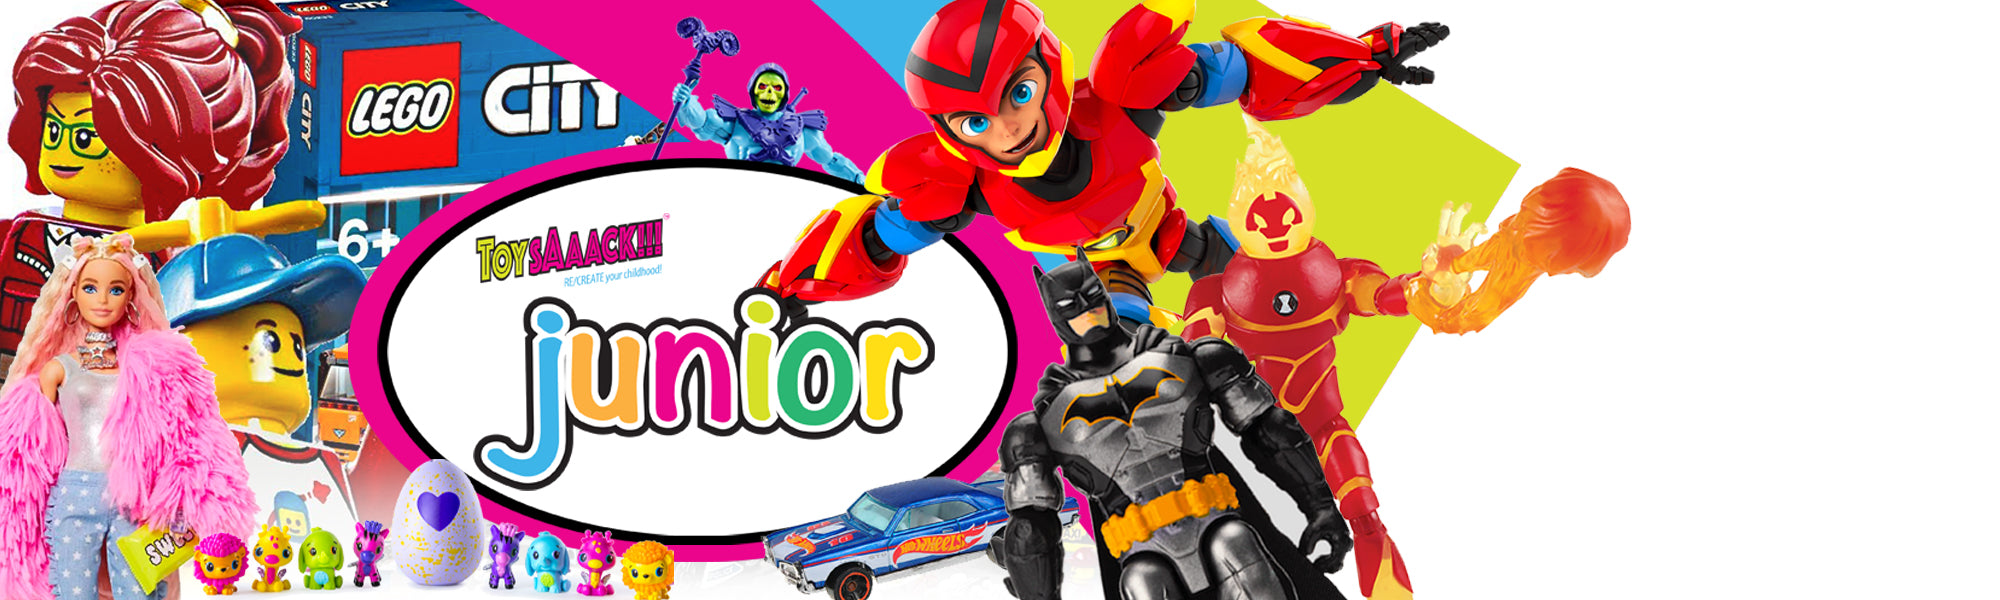 ToySack Junior - Toys for Kids